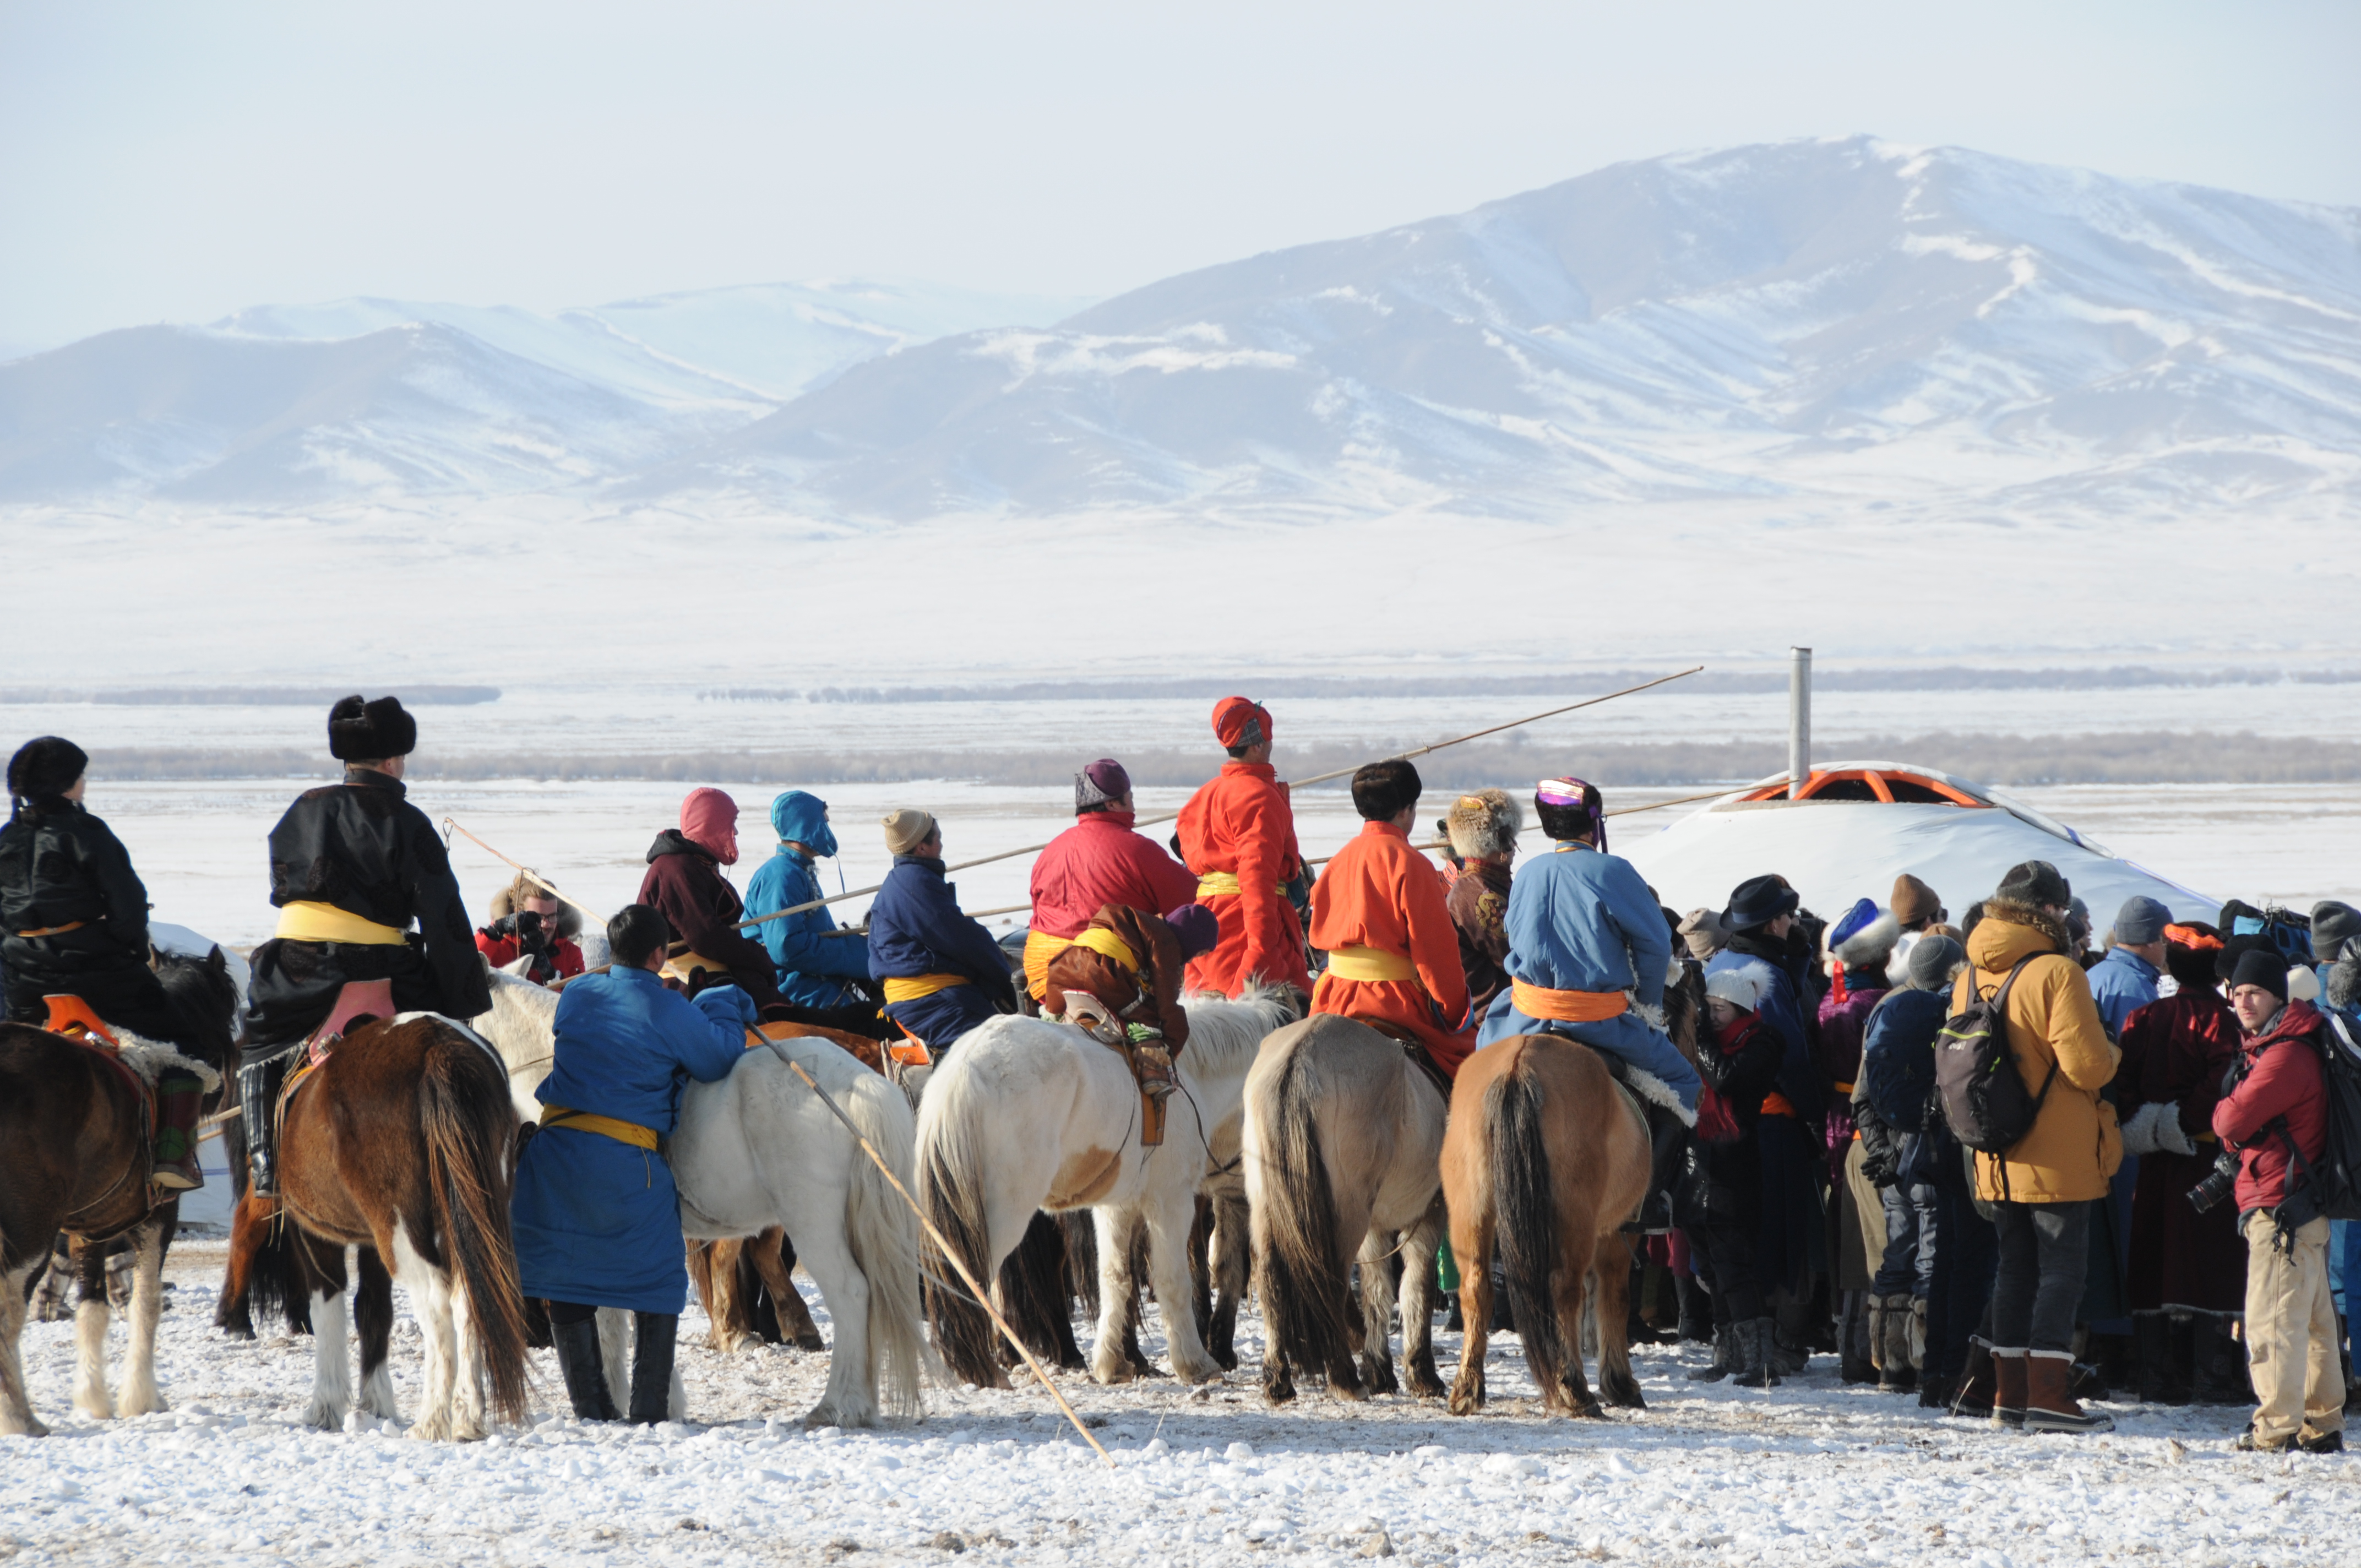 Festivals in Mongolia - Celebrations of Nomadic Traditions, Winter Horse Festival, Khentii Province